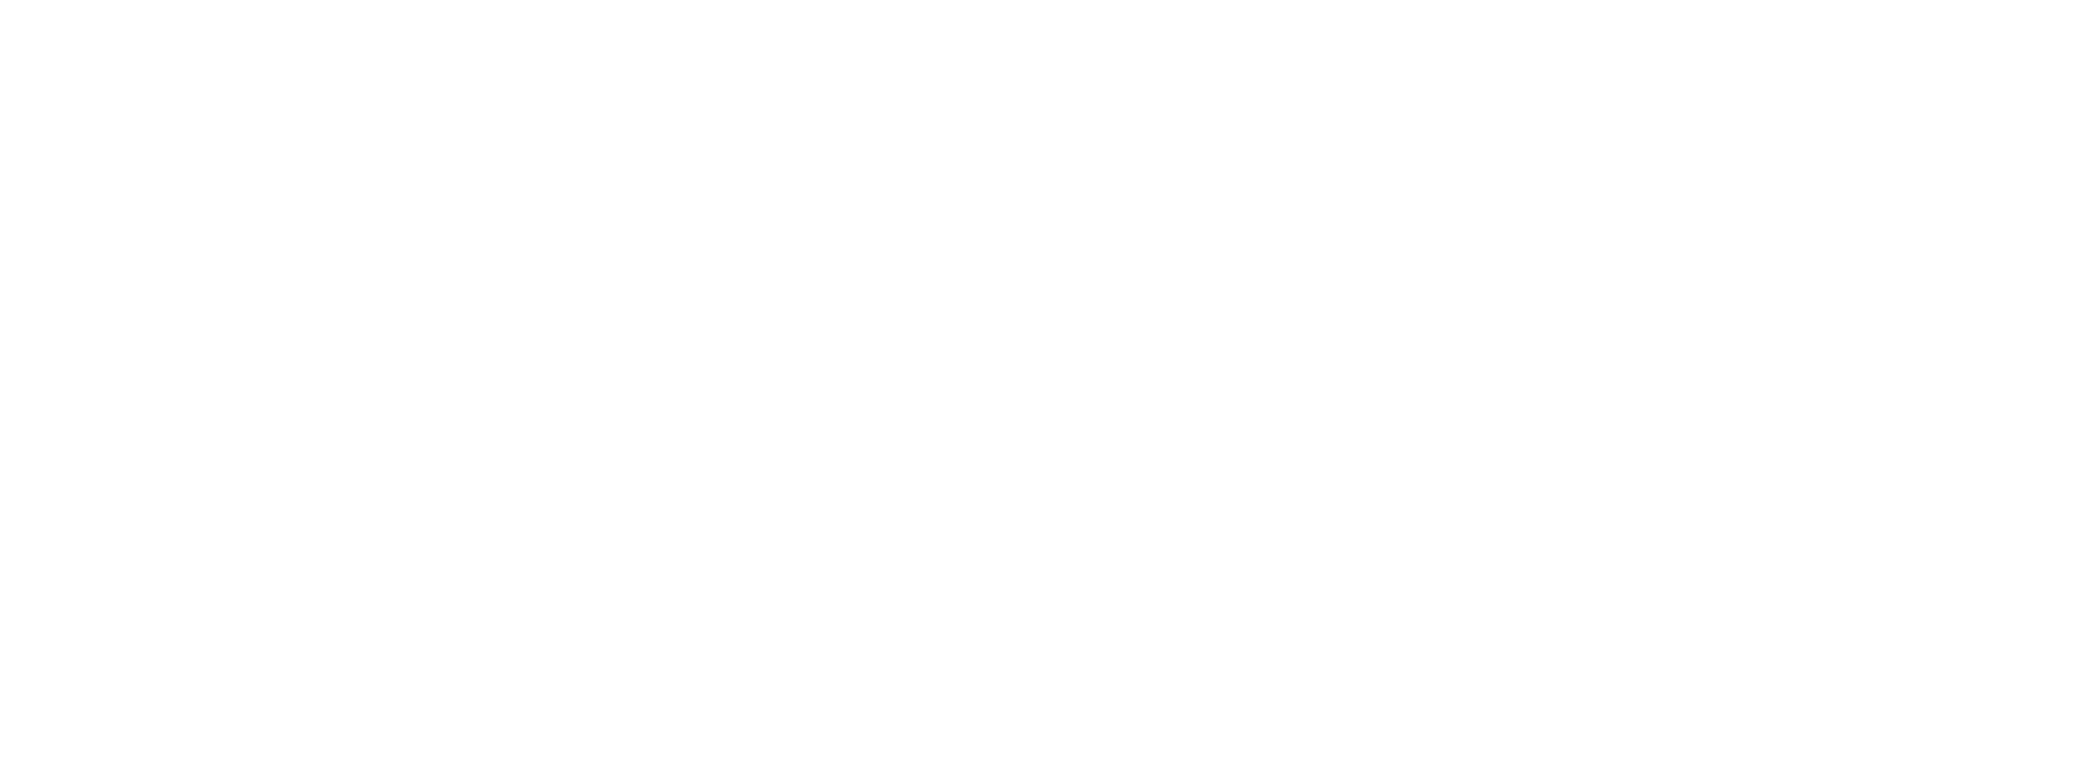 Microsoft all White